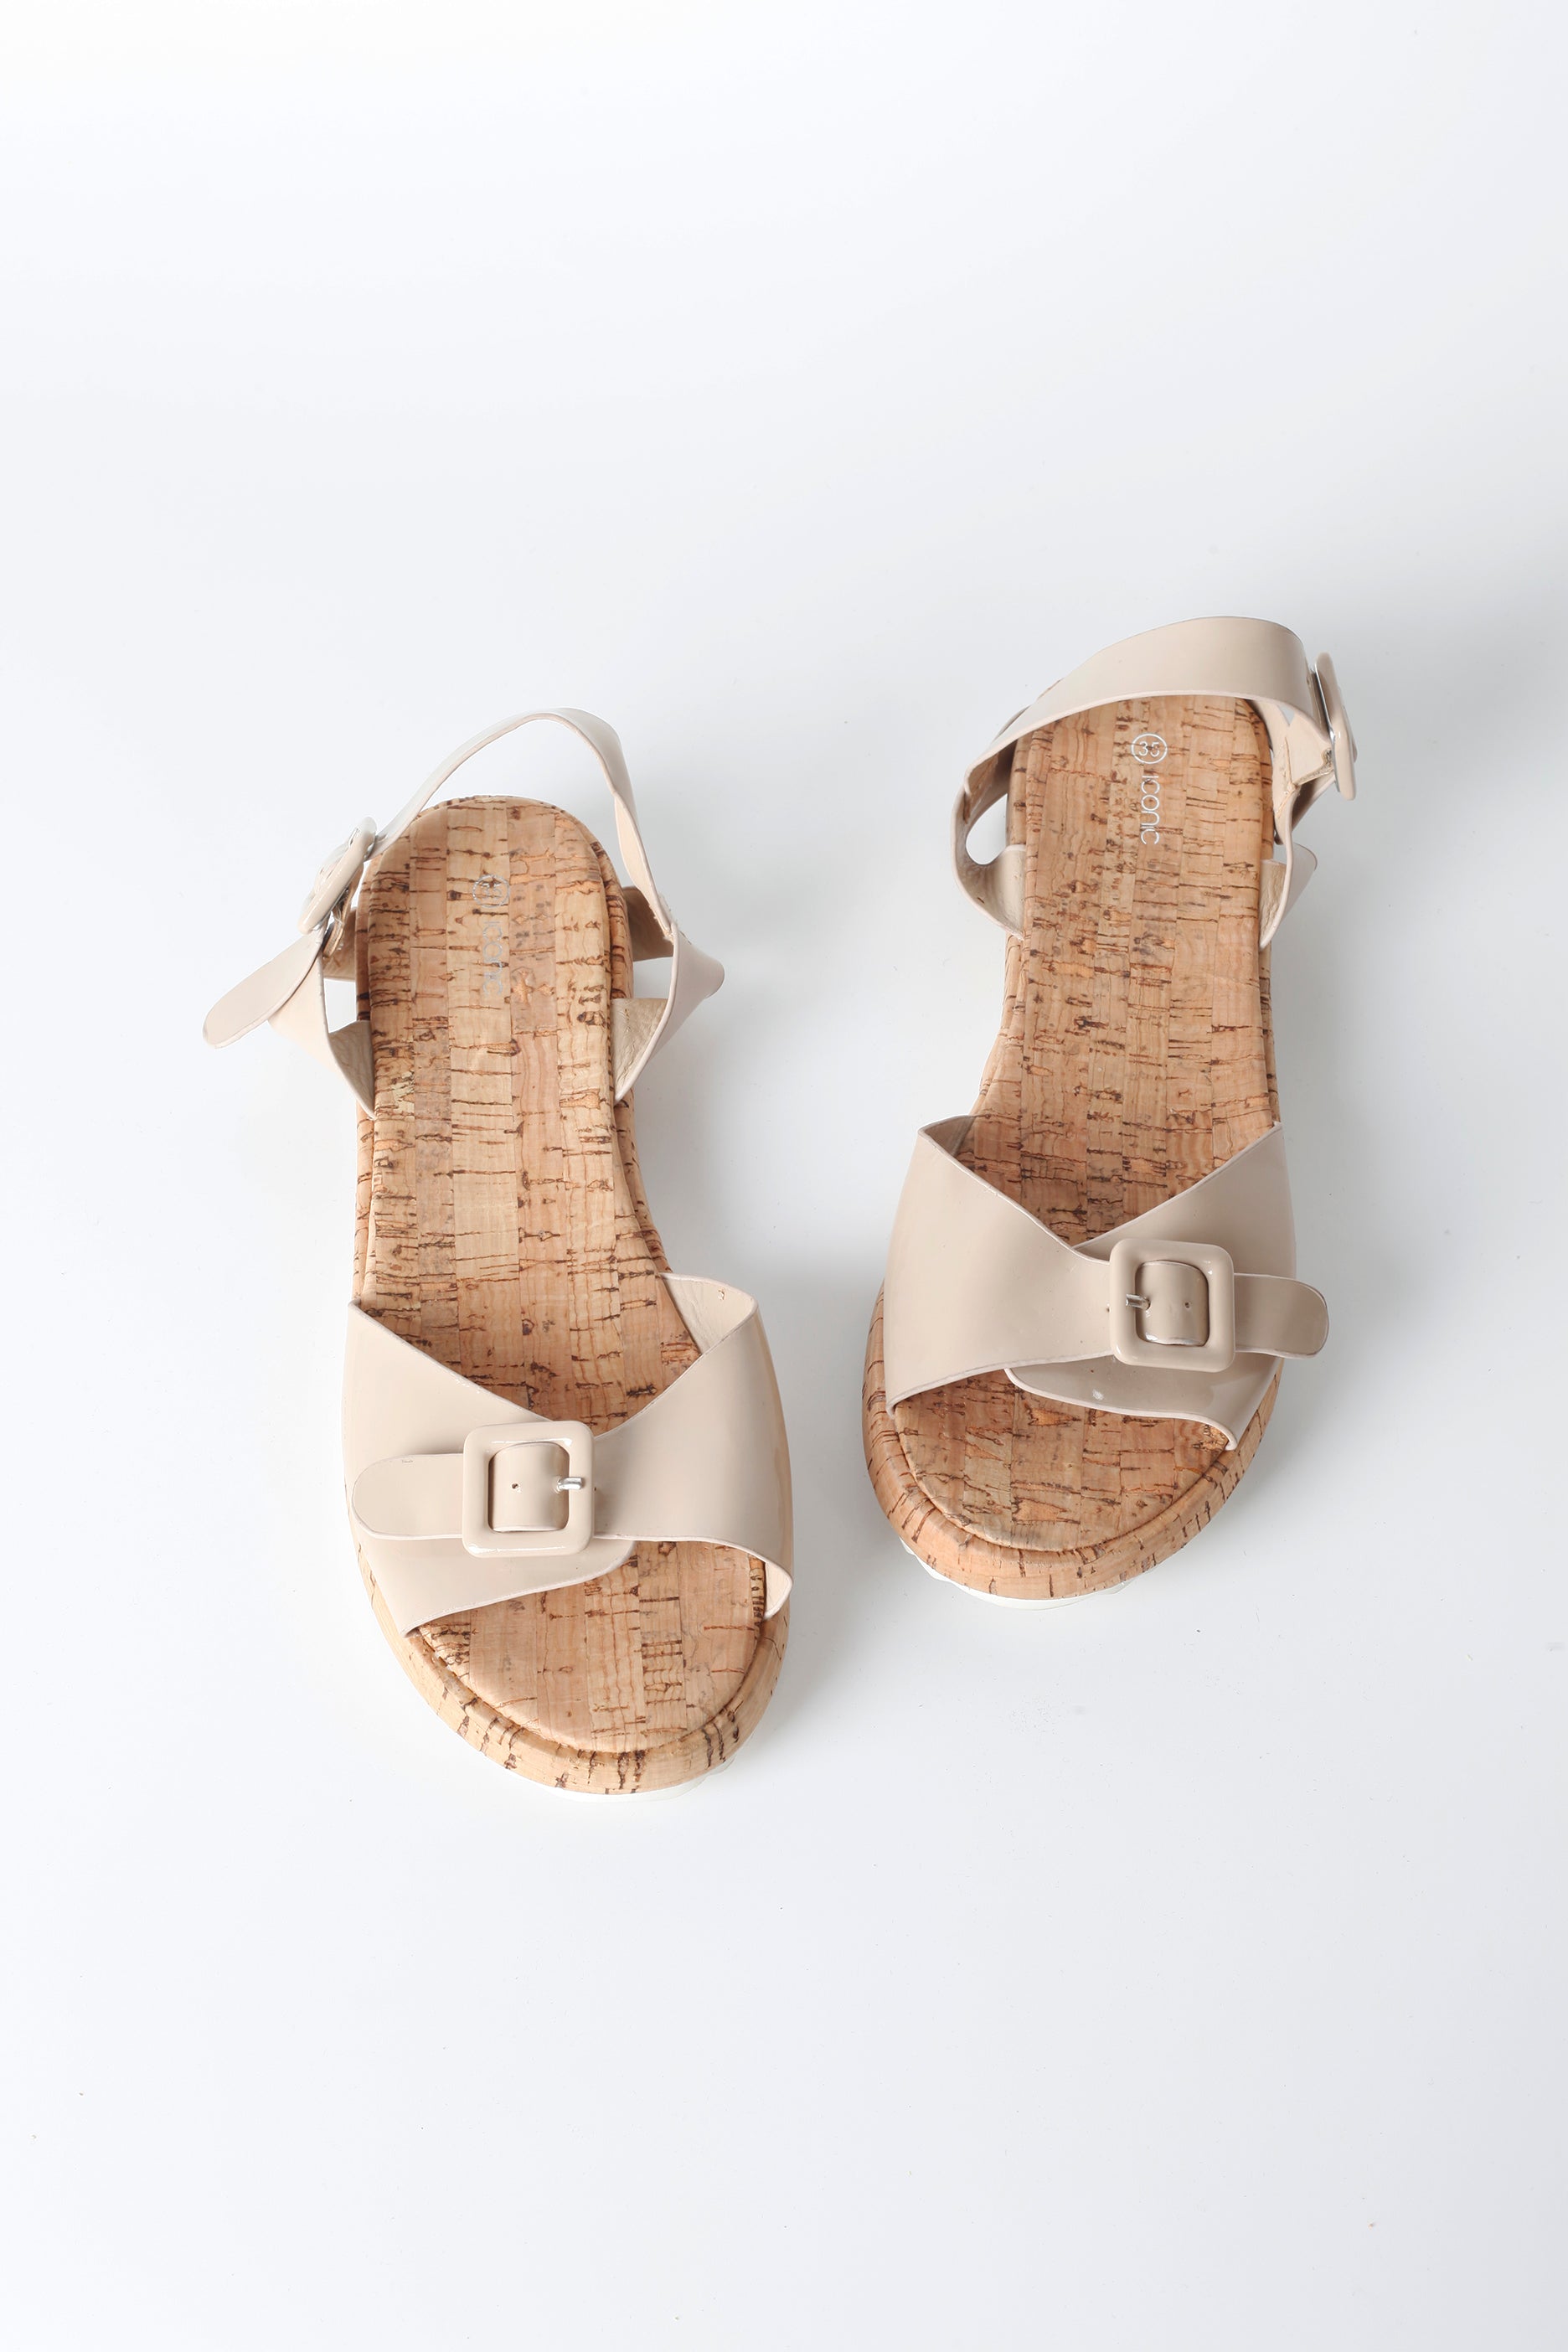 Girls Beige Patent Sandals with Cork Sole